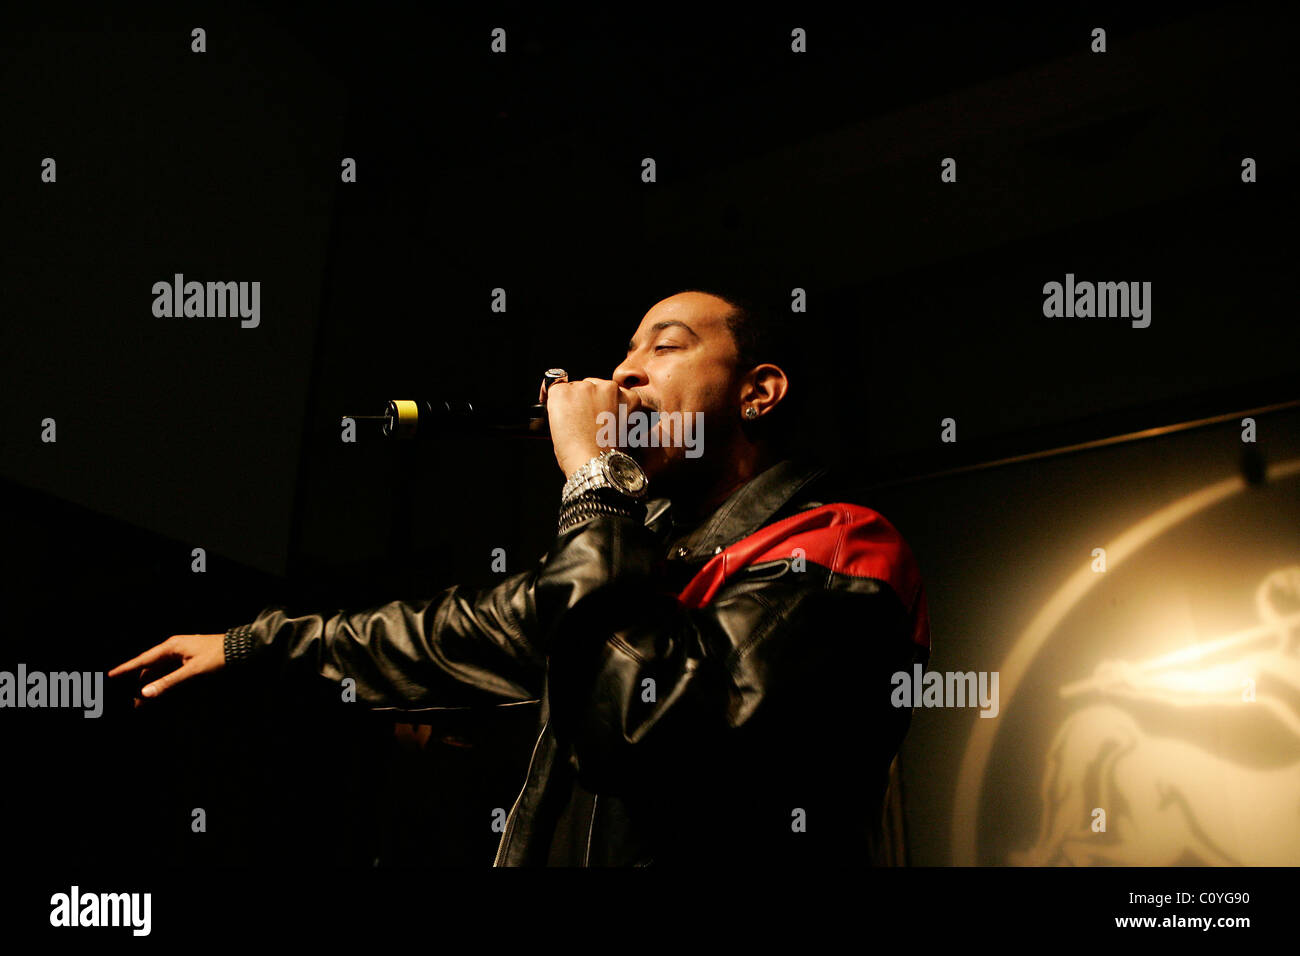 Ludacris Performs at Remy Music Lounge at Strata Nightclub New York City,  USA - 25.11.08 Stock Photo - Alamy